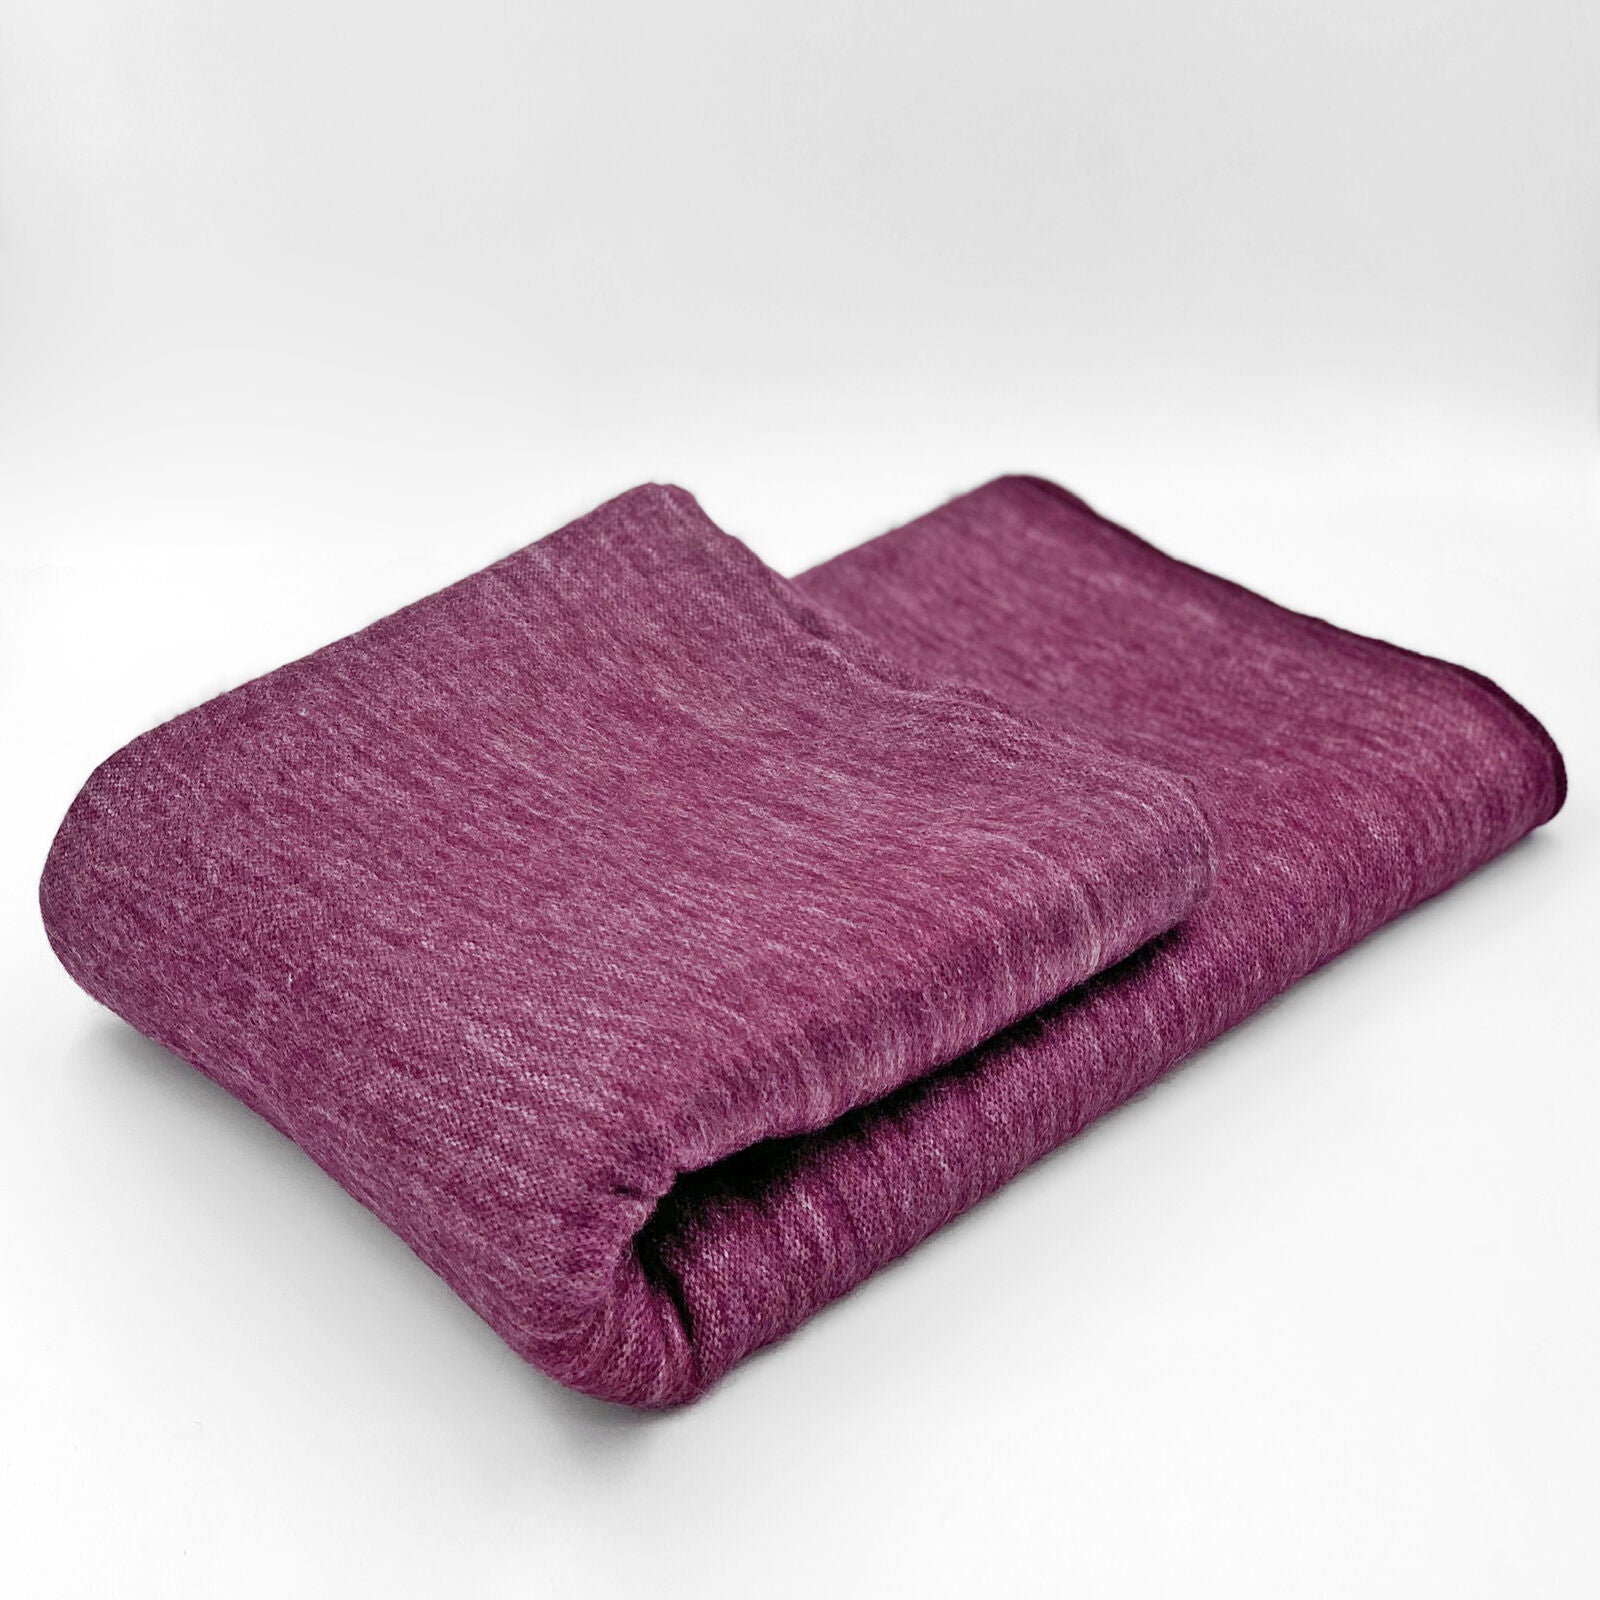 Cunuyacu - Baby Alpaca Wool Throw Blanket / Sofa Cover - Queen 98" x 67" - Striped Pattern Dark Purple Lilac